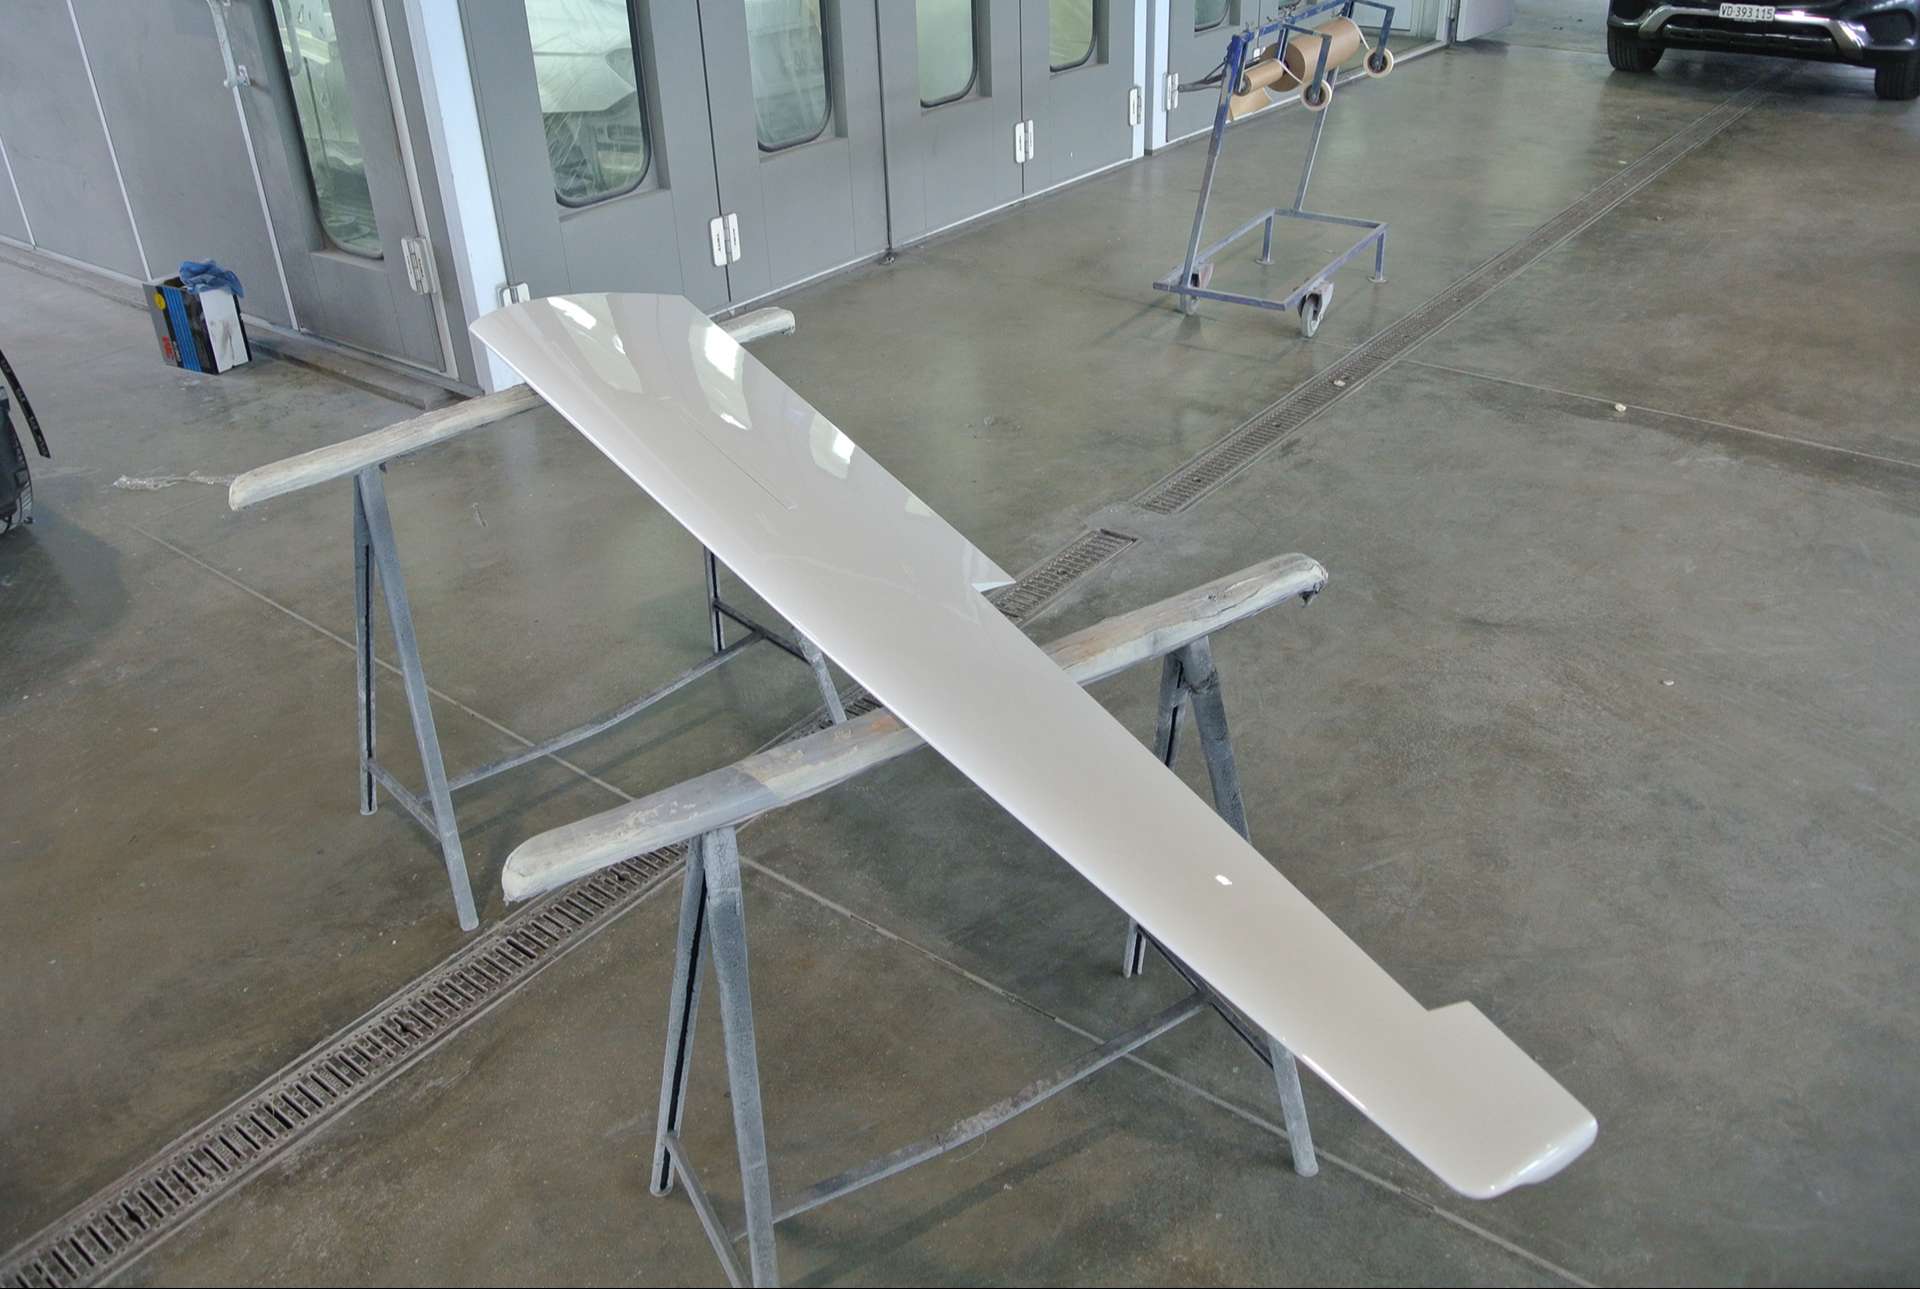 Glider renovation at Binggeli body shop